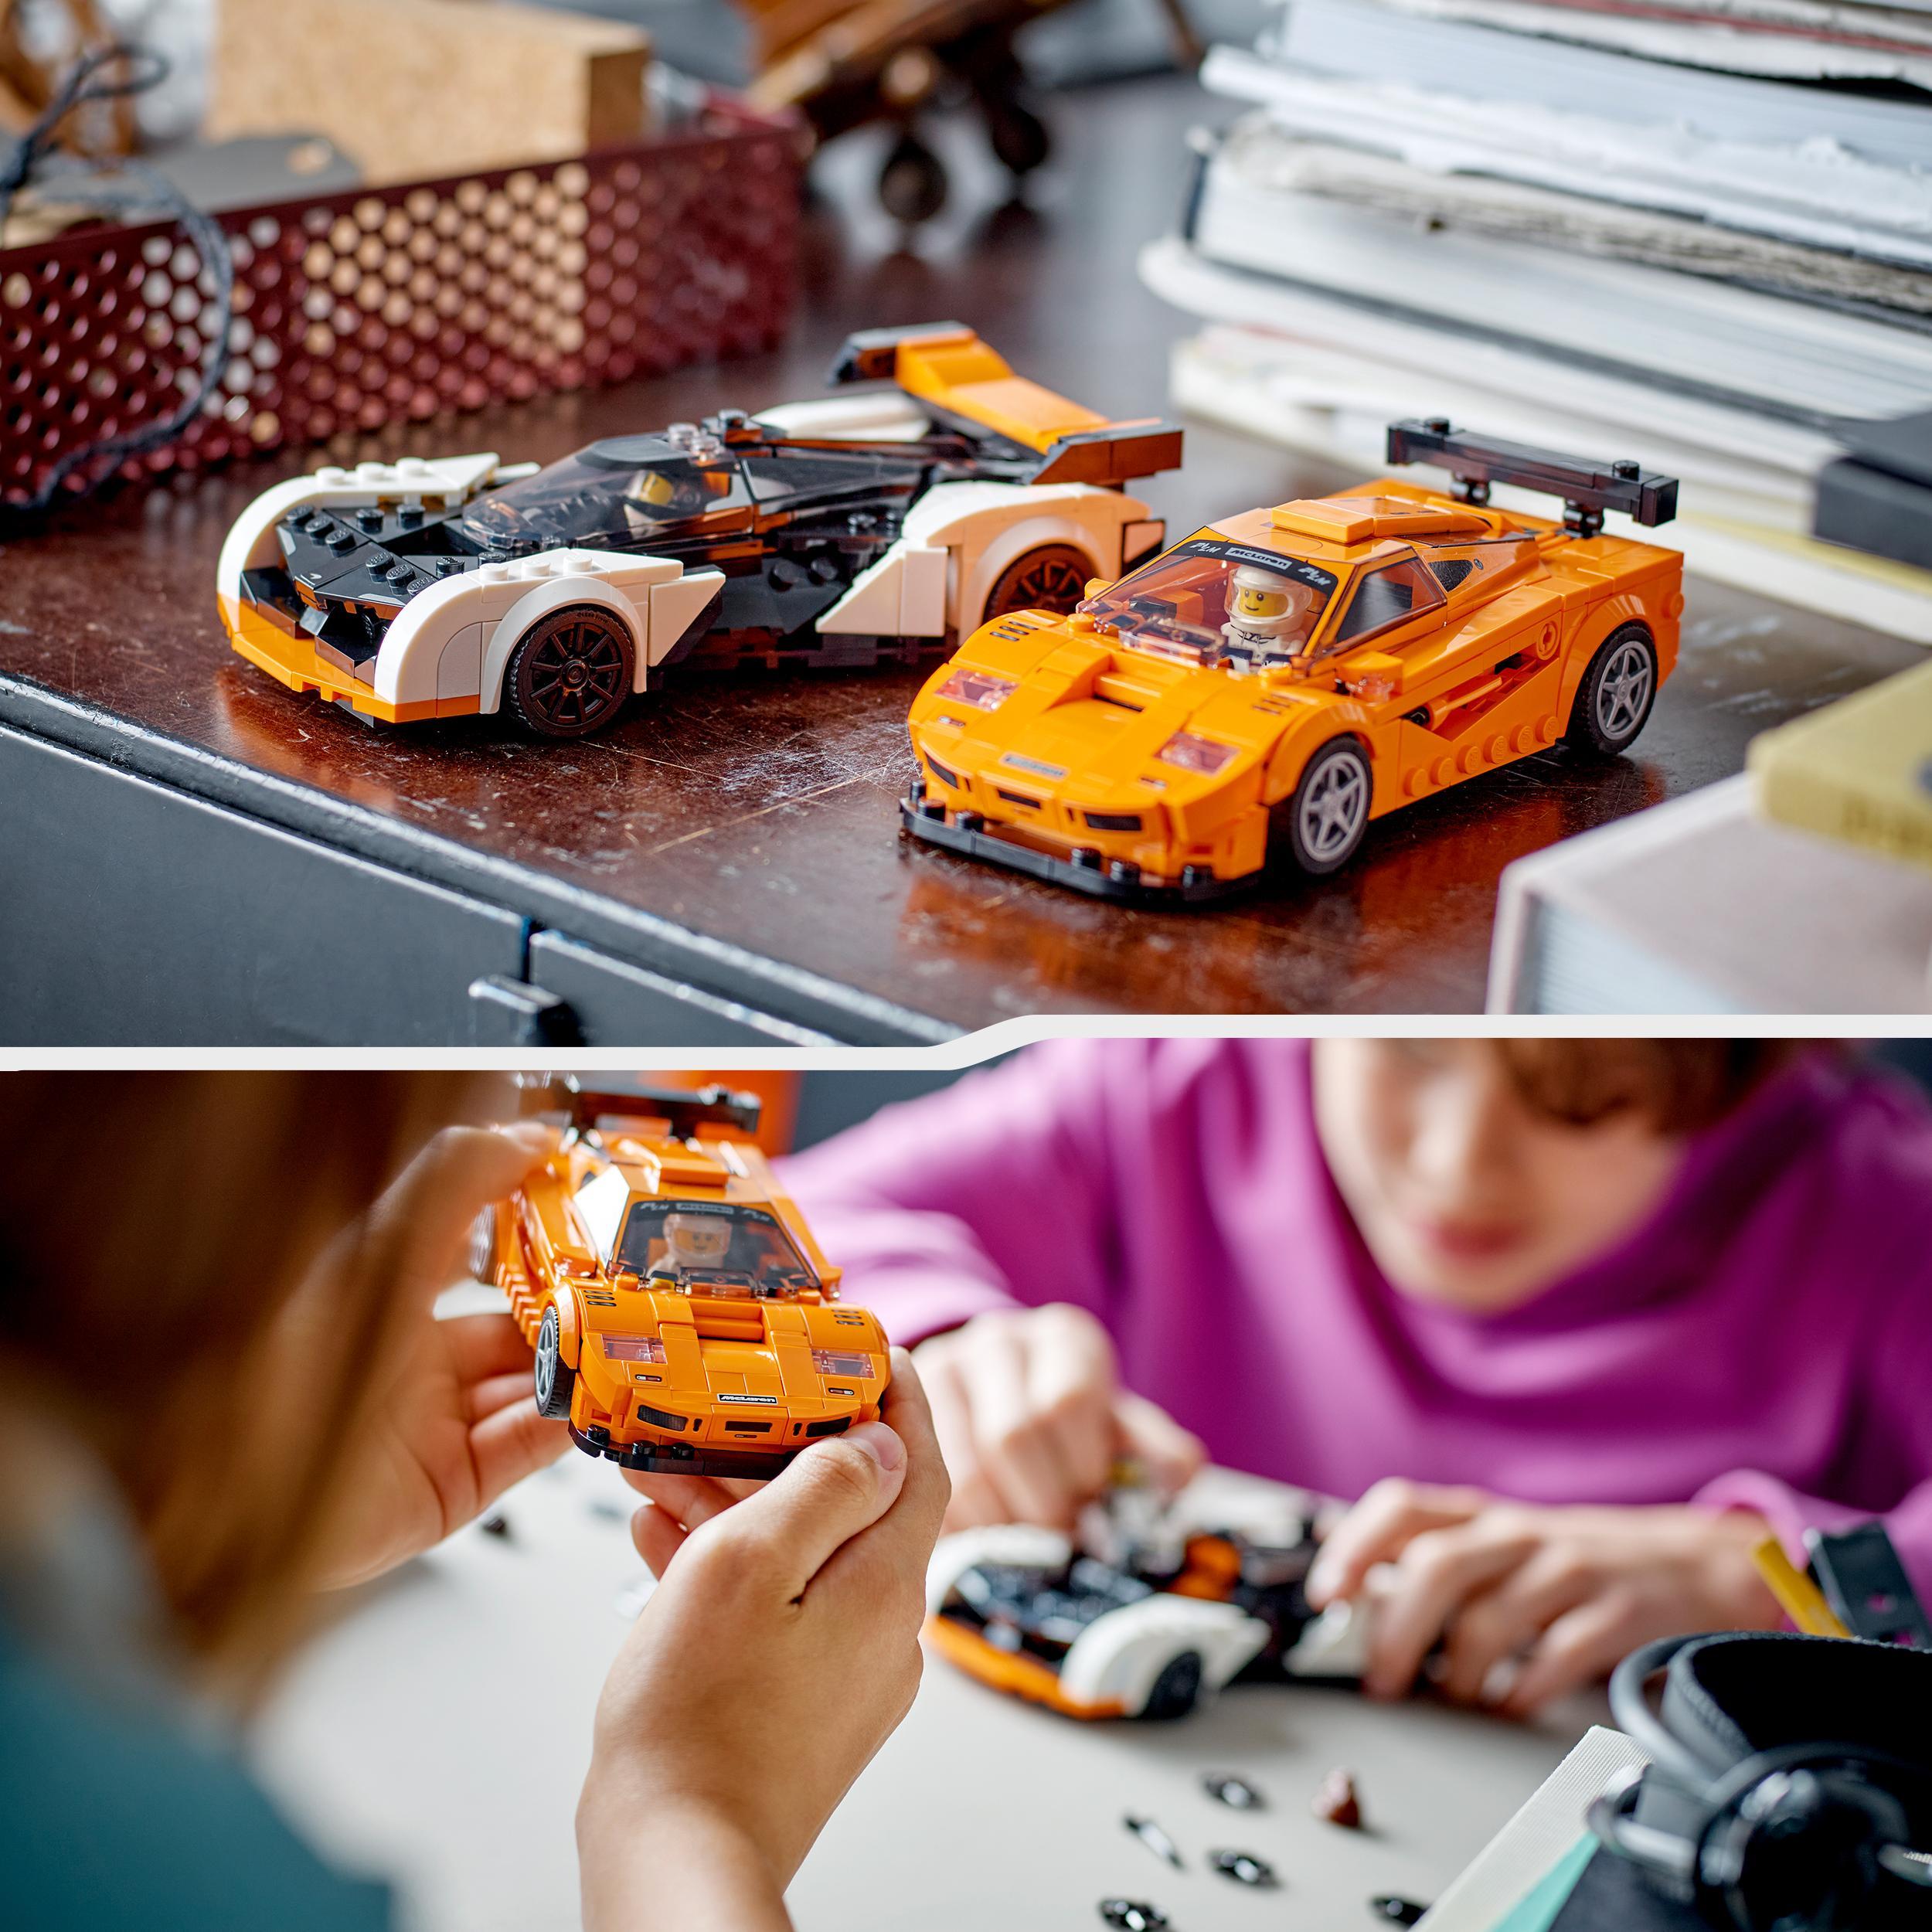 Lego speed champions 76918 mclaren solus gt & mclaren f1 lm, 2 modellini di auto da costruire, kit macchine giocattolo 2023 - LEGO SPEED CHAMPIONS